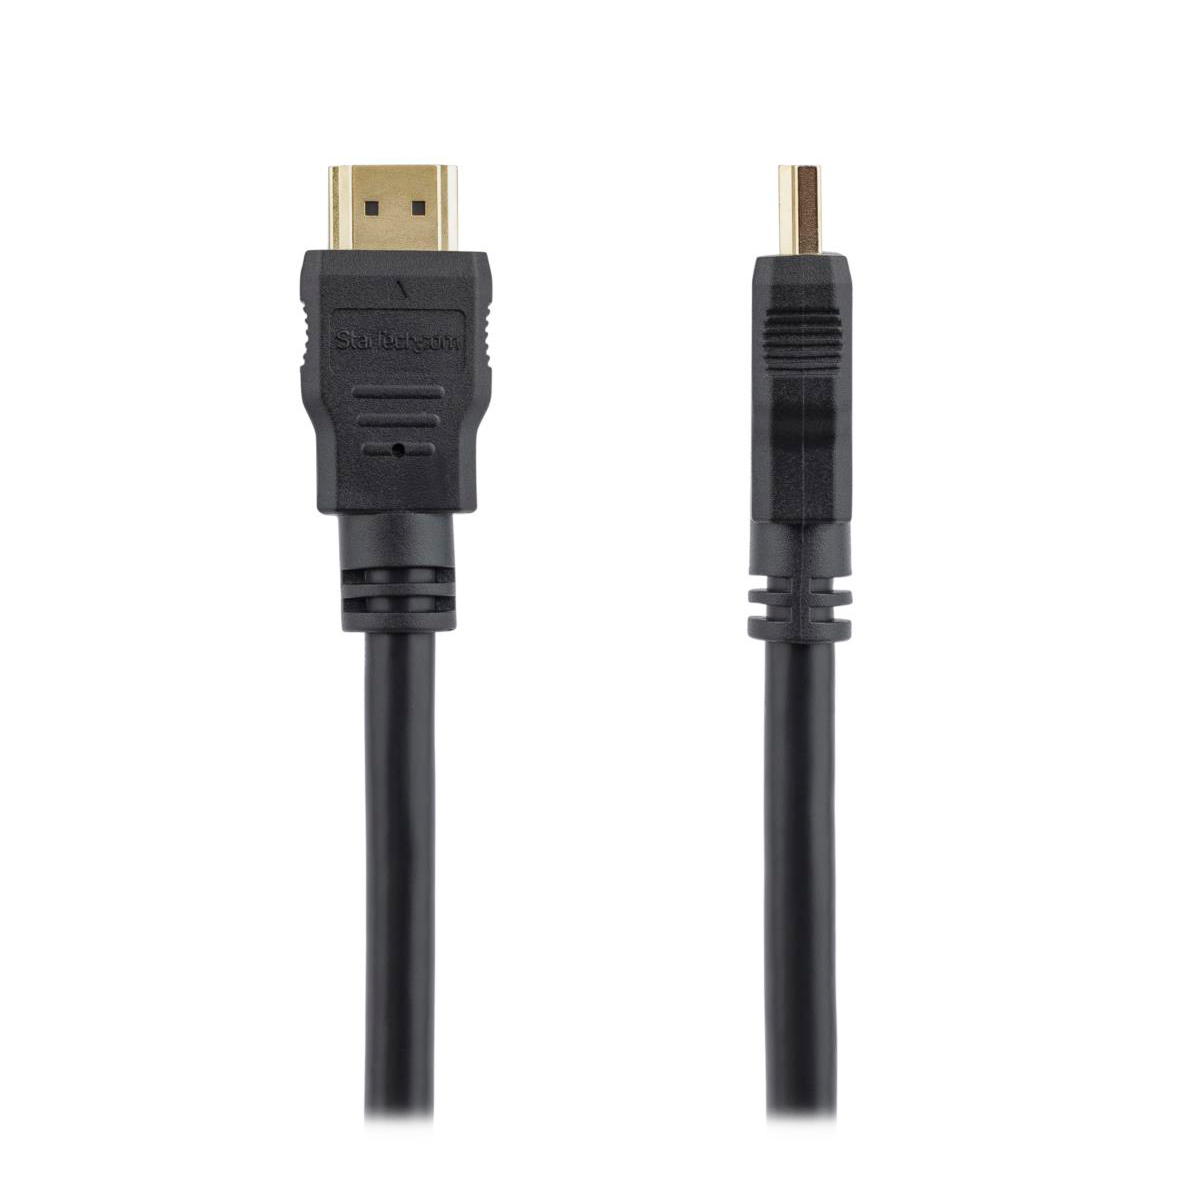 Cable HDMI LED de 3 metros/10 pies, Calidad premium